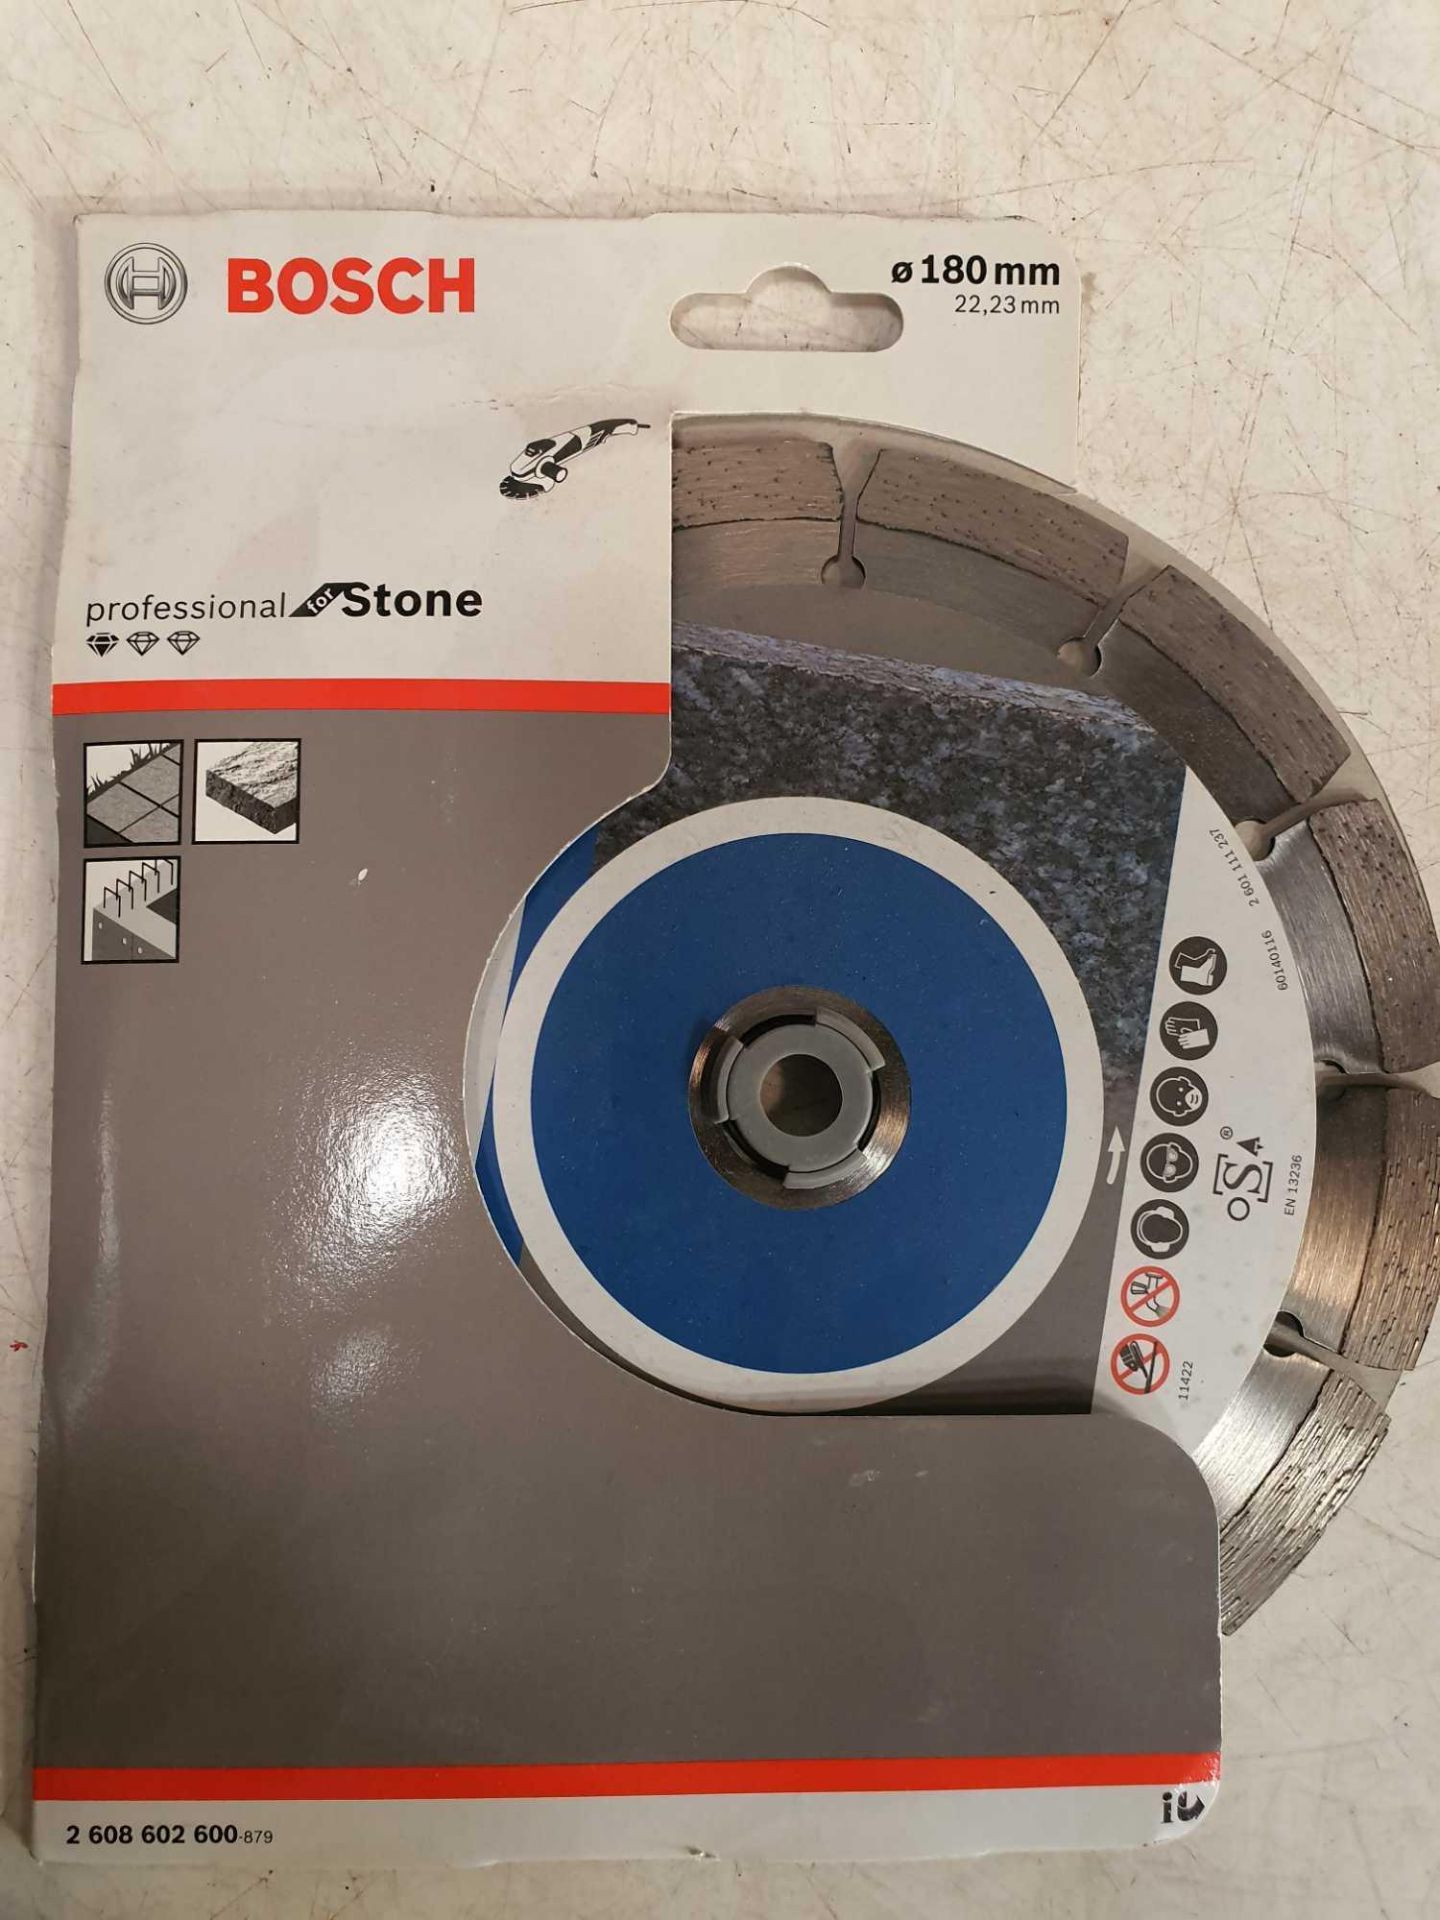 Bosch cutting blade for stone